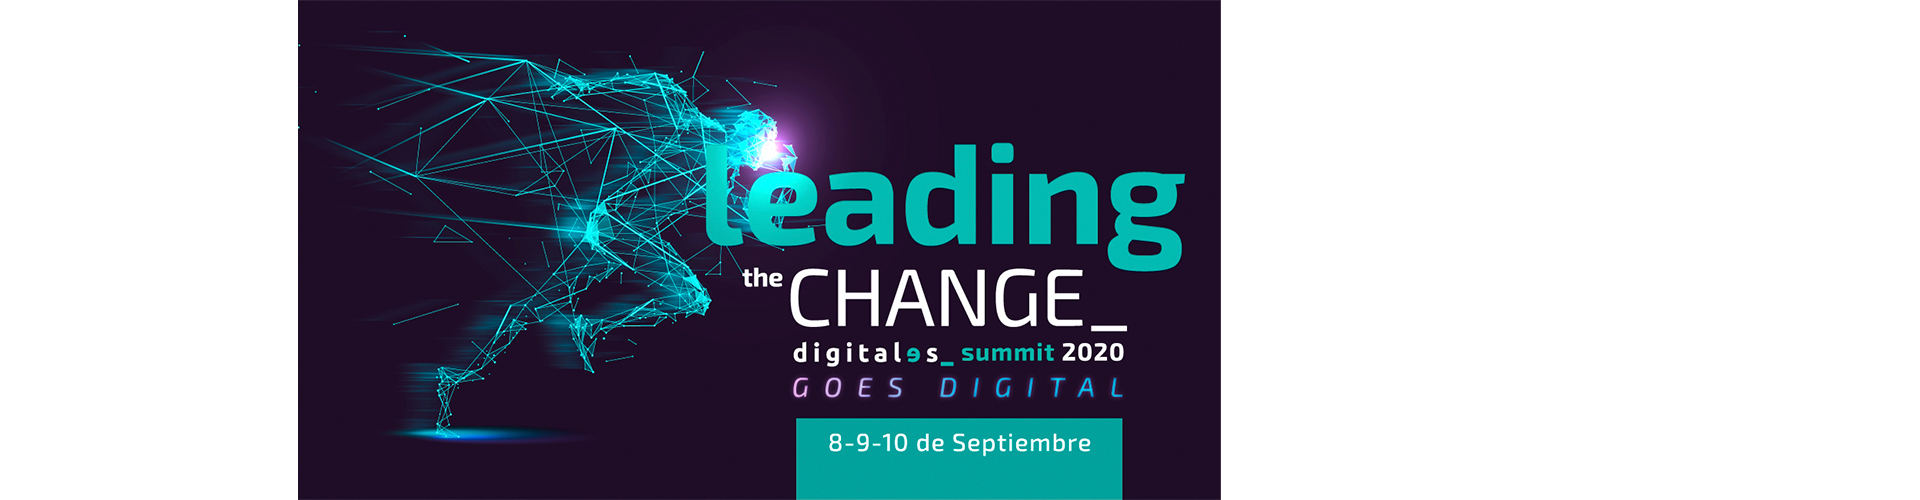 DigitalES Summit 2020